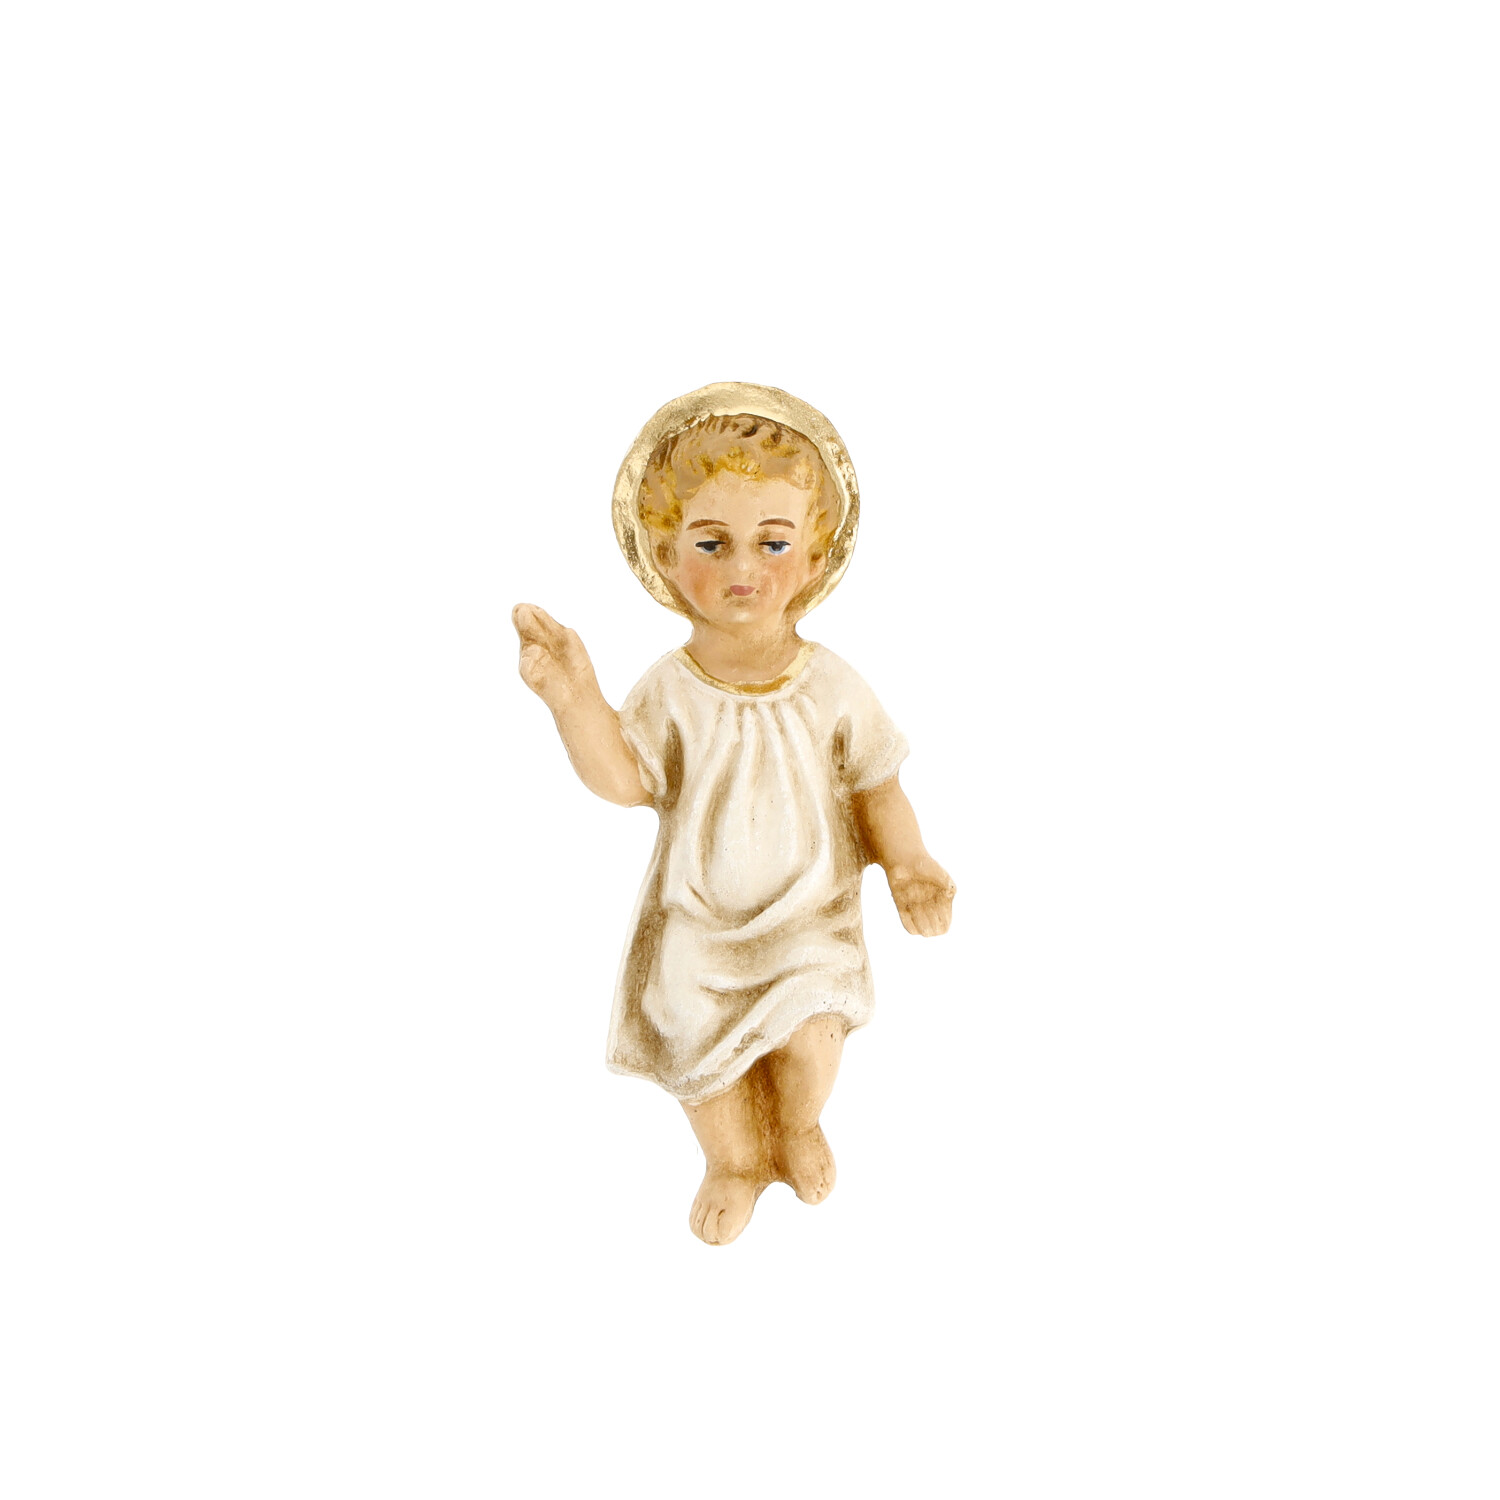 Infant Jesus - Marolin Nativity figure - made in Germany